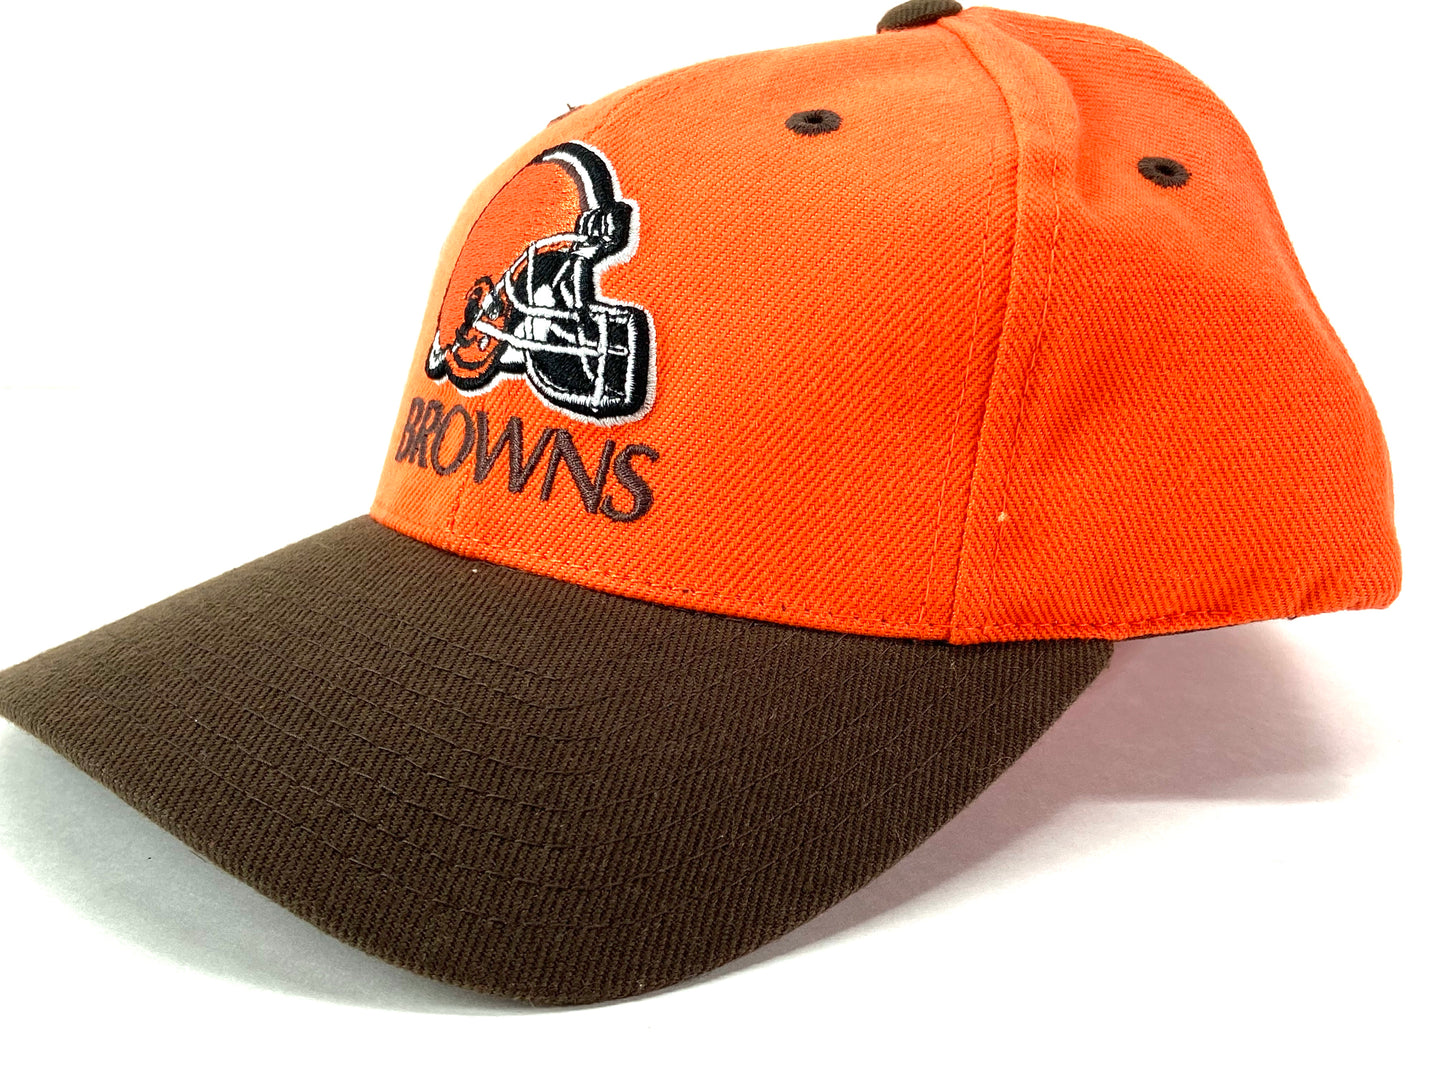 Cleveland Browns Vintage NFL Team Color 20% Wool Cap by Puma